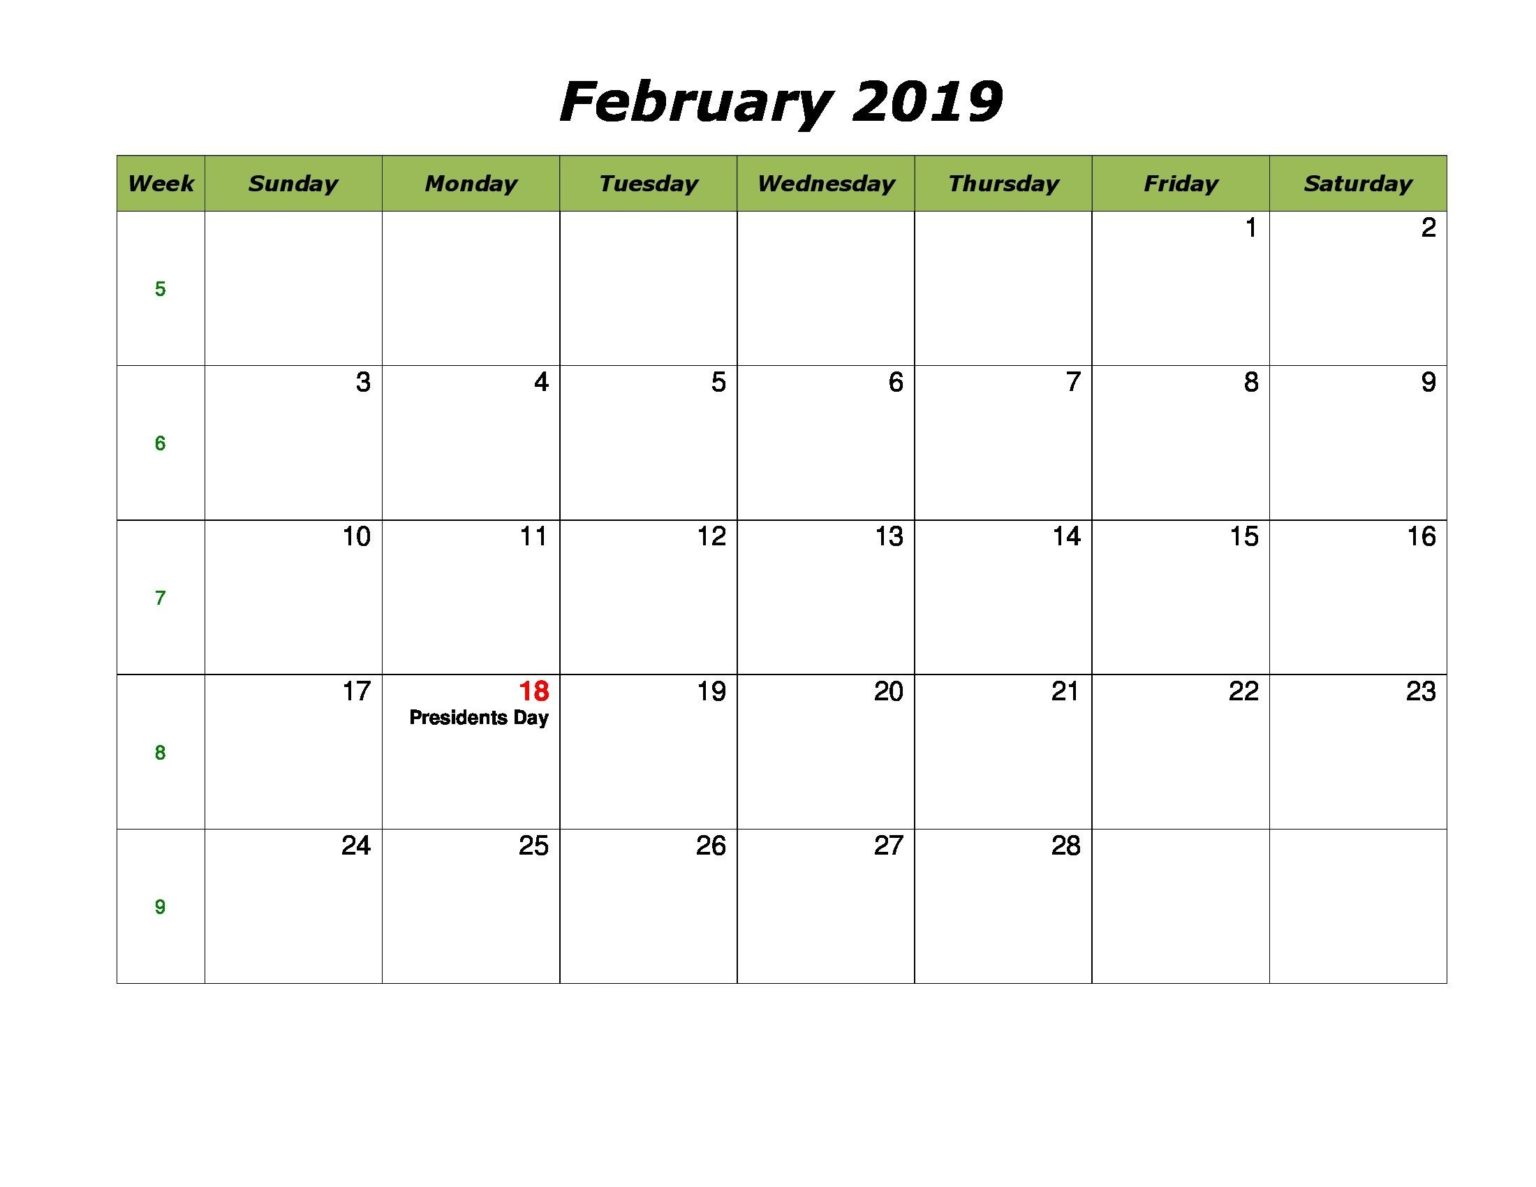 February 2020 Printable Calendar